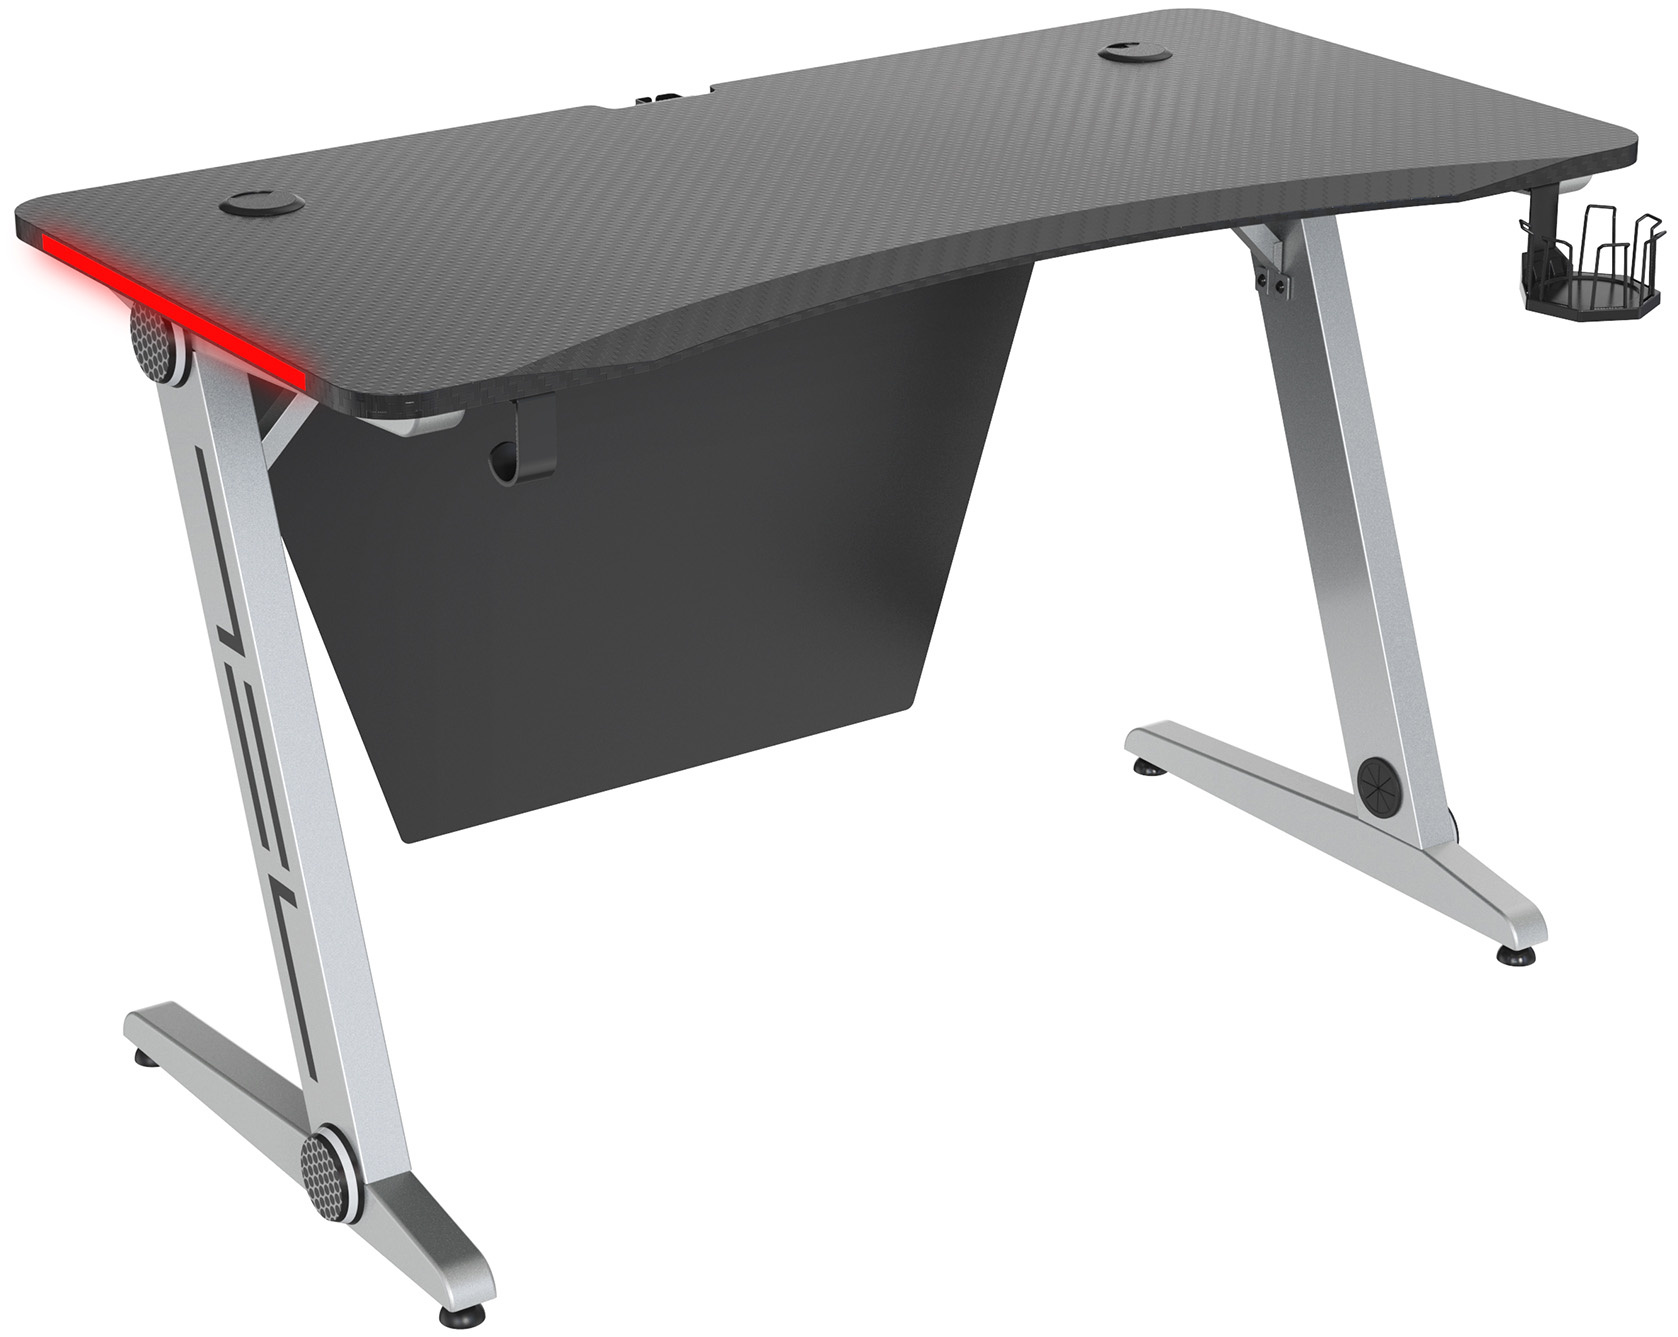   E2E4 Игровой стол Cactus CS-GTZ-SL-CARBON-RED, металл/пластик, карбон/серебрис (CS-GTZ-SL-CARBON-RED)